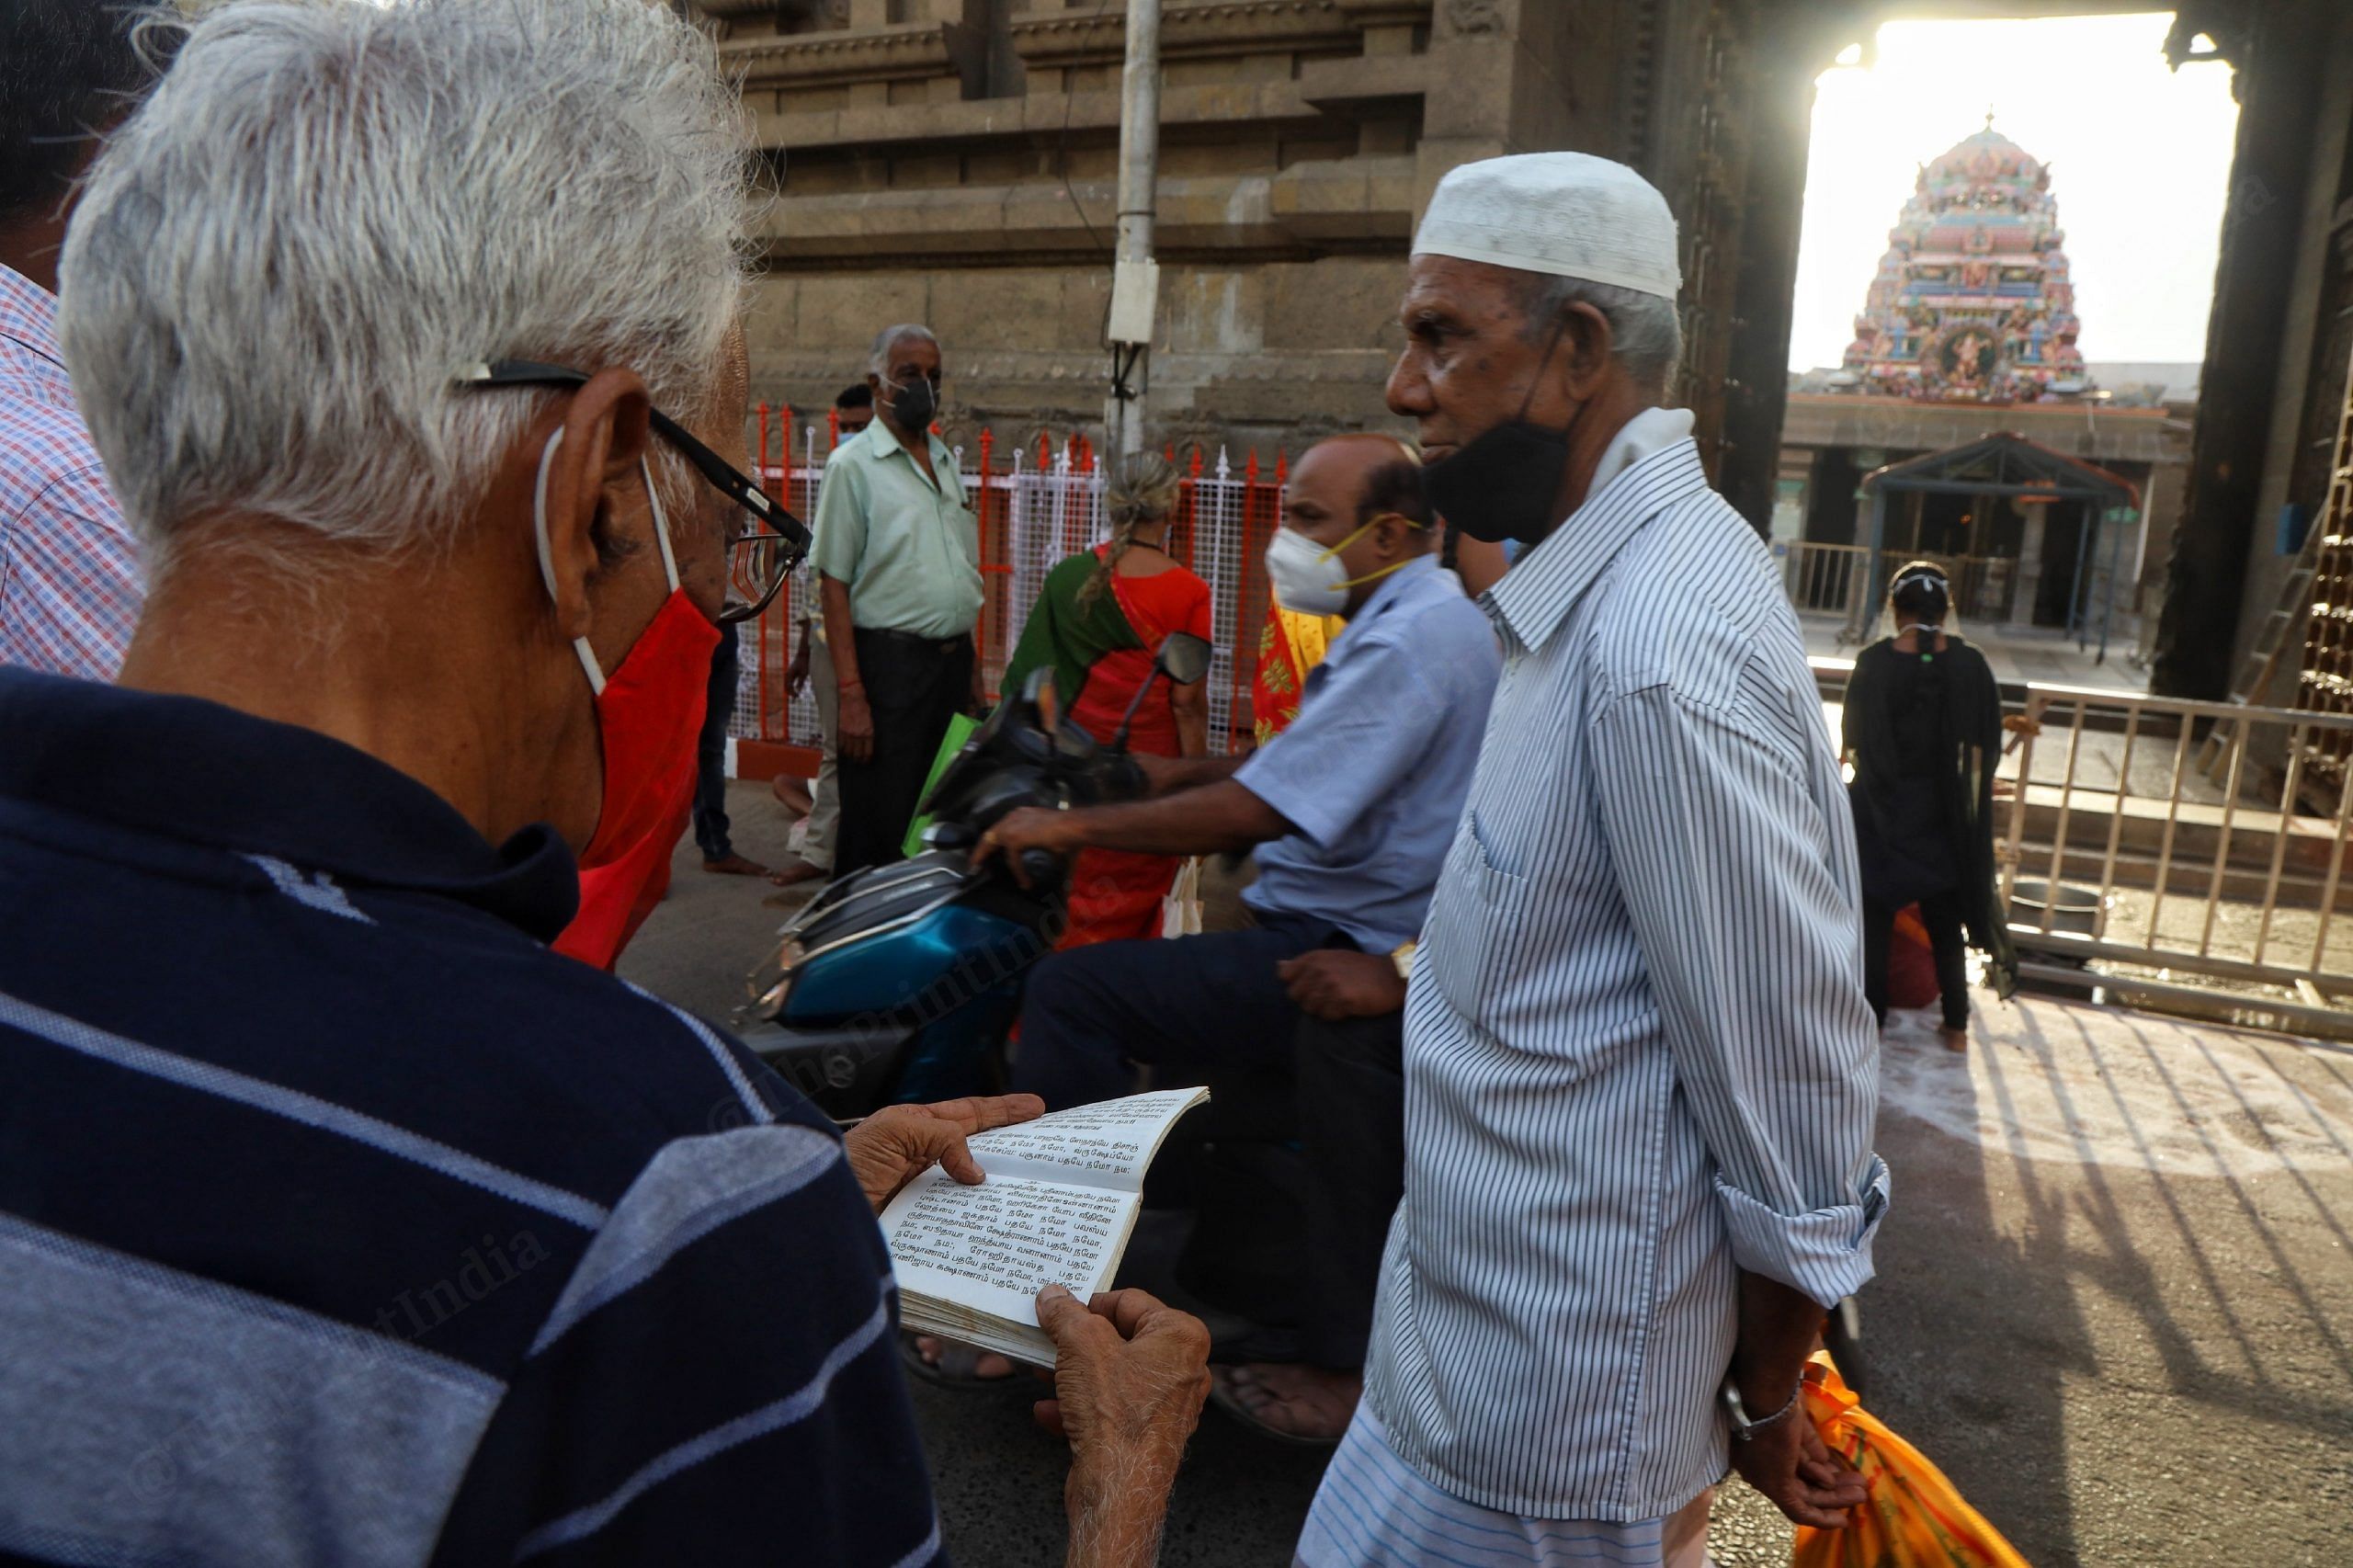 Before the opening of the temple, Natarajan prays from a shloka book. | Photo: Manisha Mondal/ThePrint